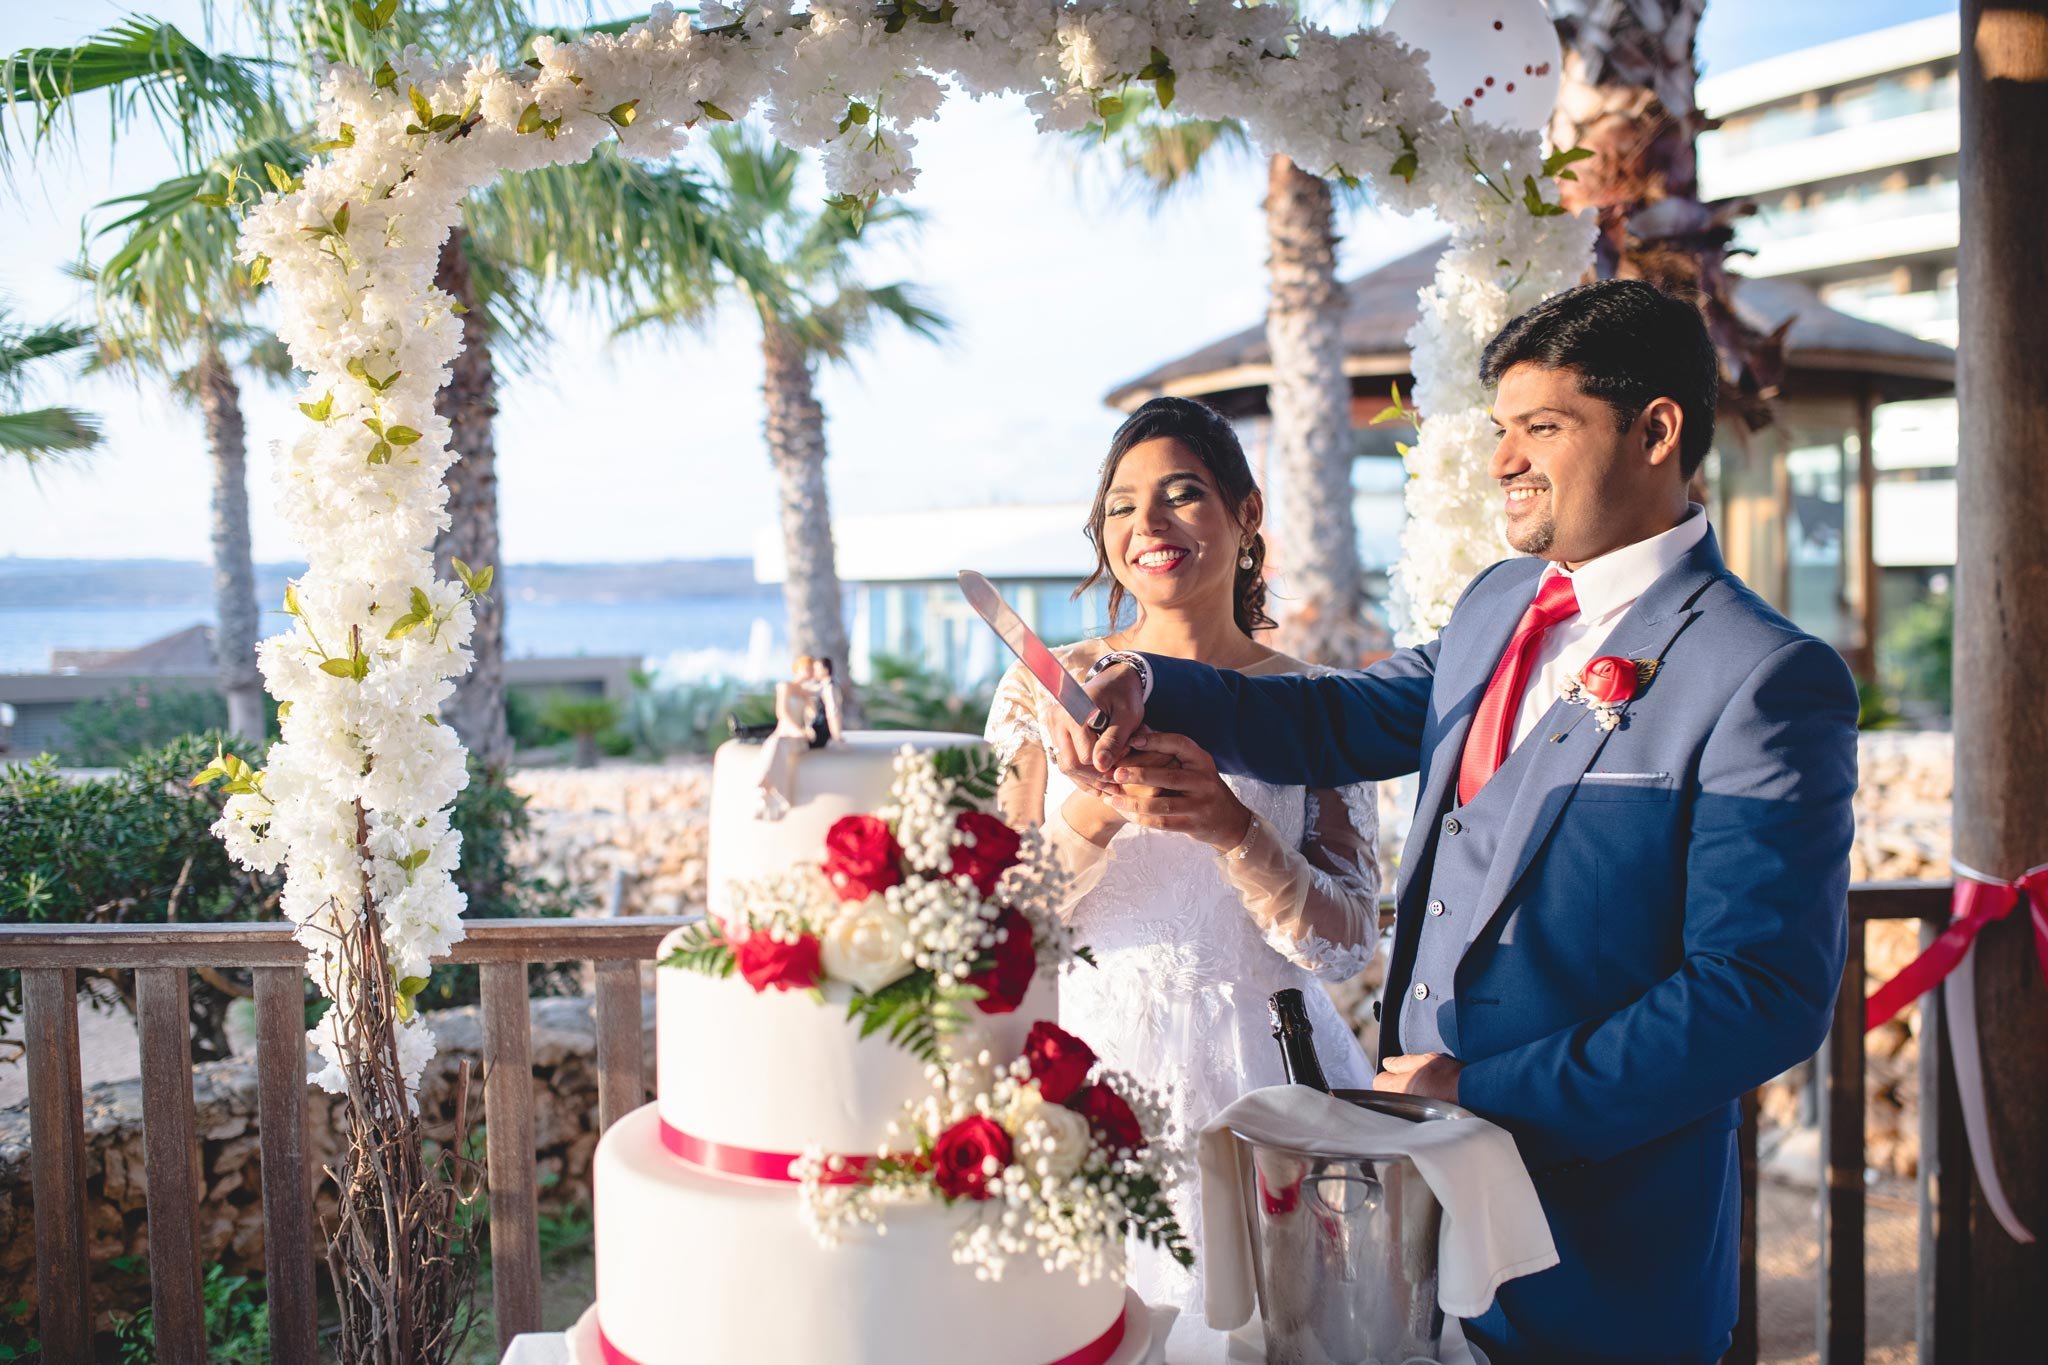 Married couple cutting wedding cake at Ramla Bay Resort